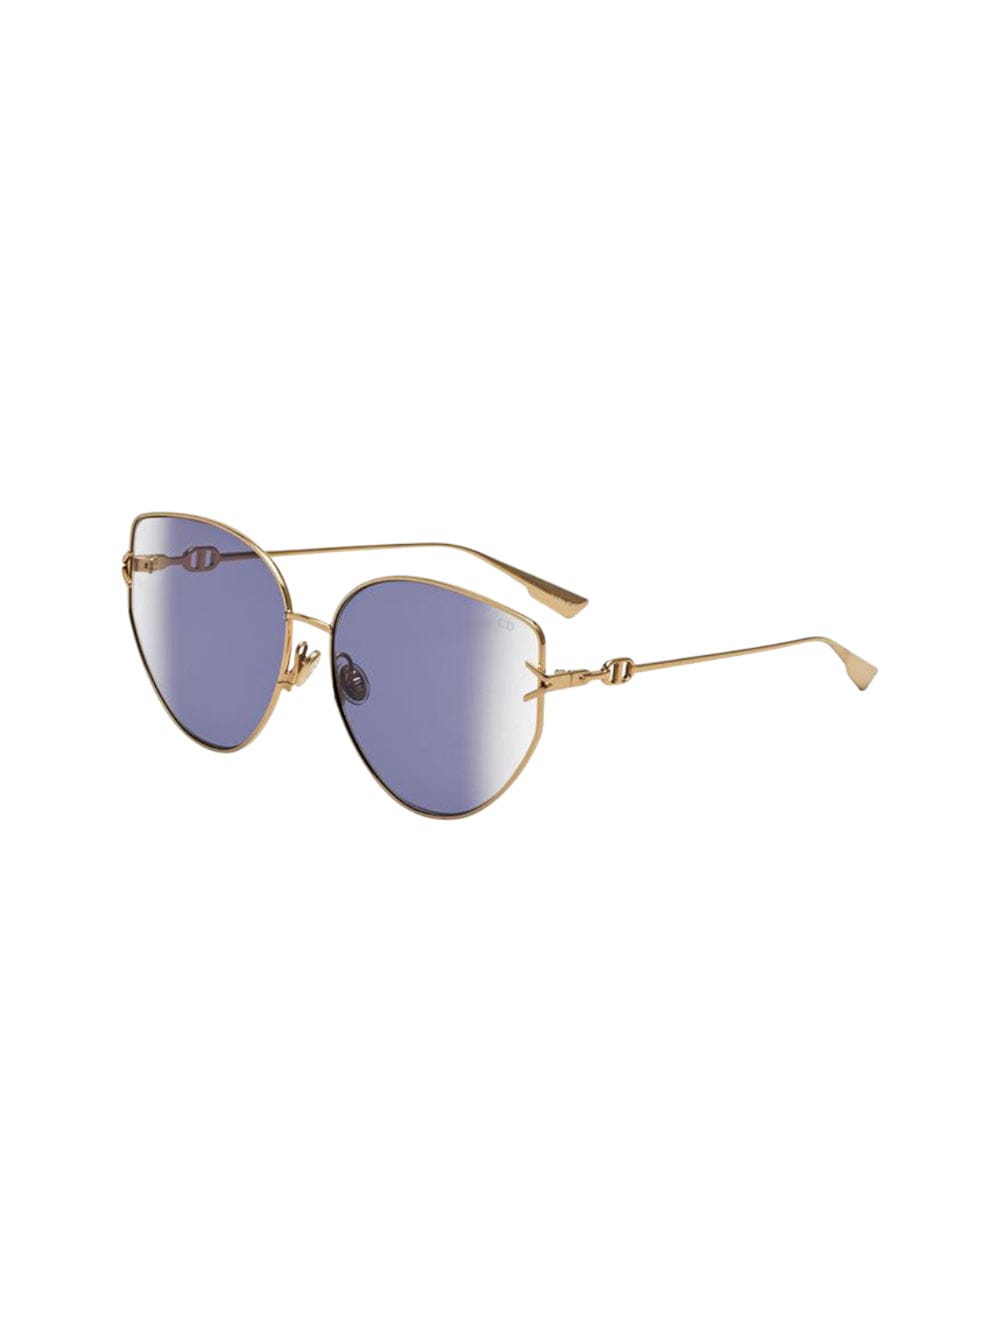 Dior Gipsy 1 - Rose Gold Sunglasses